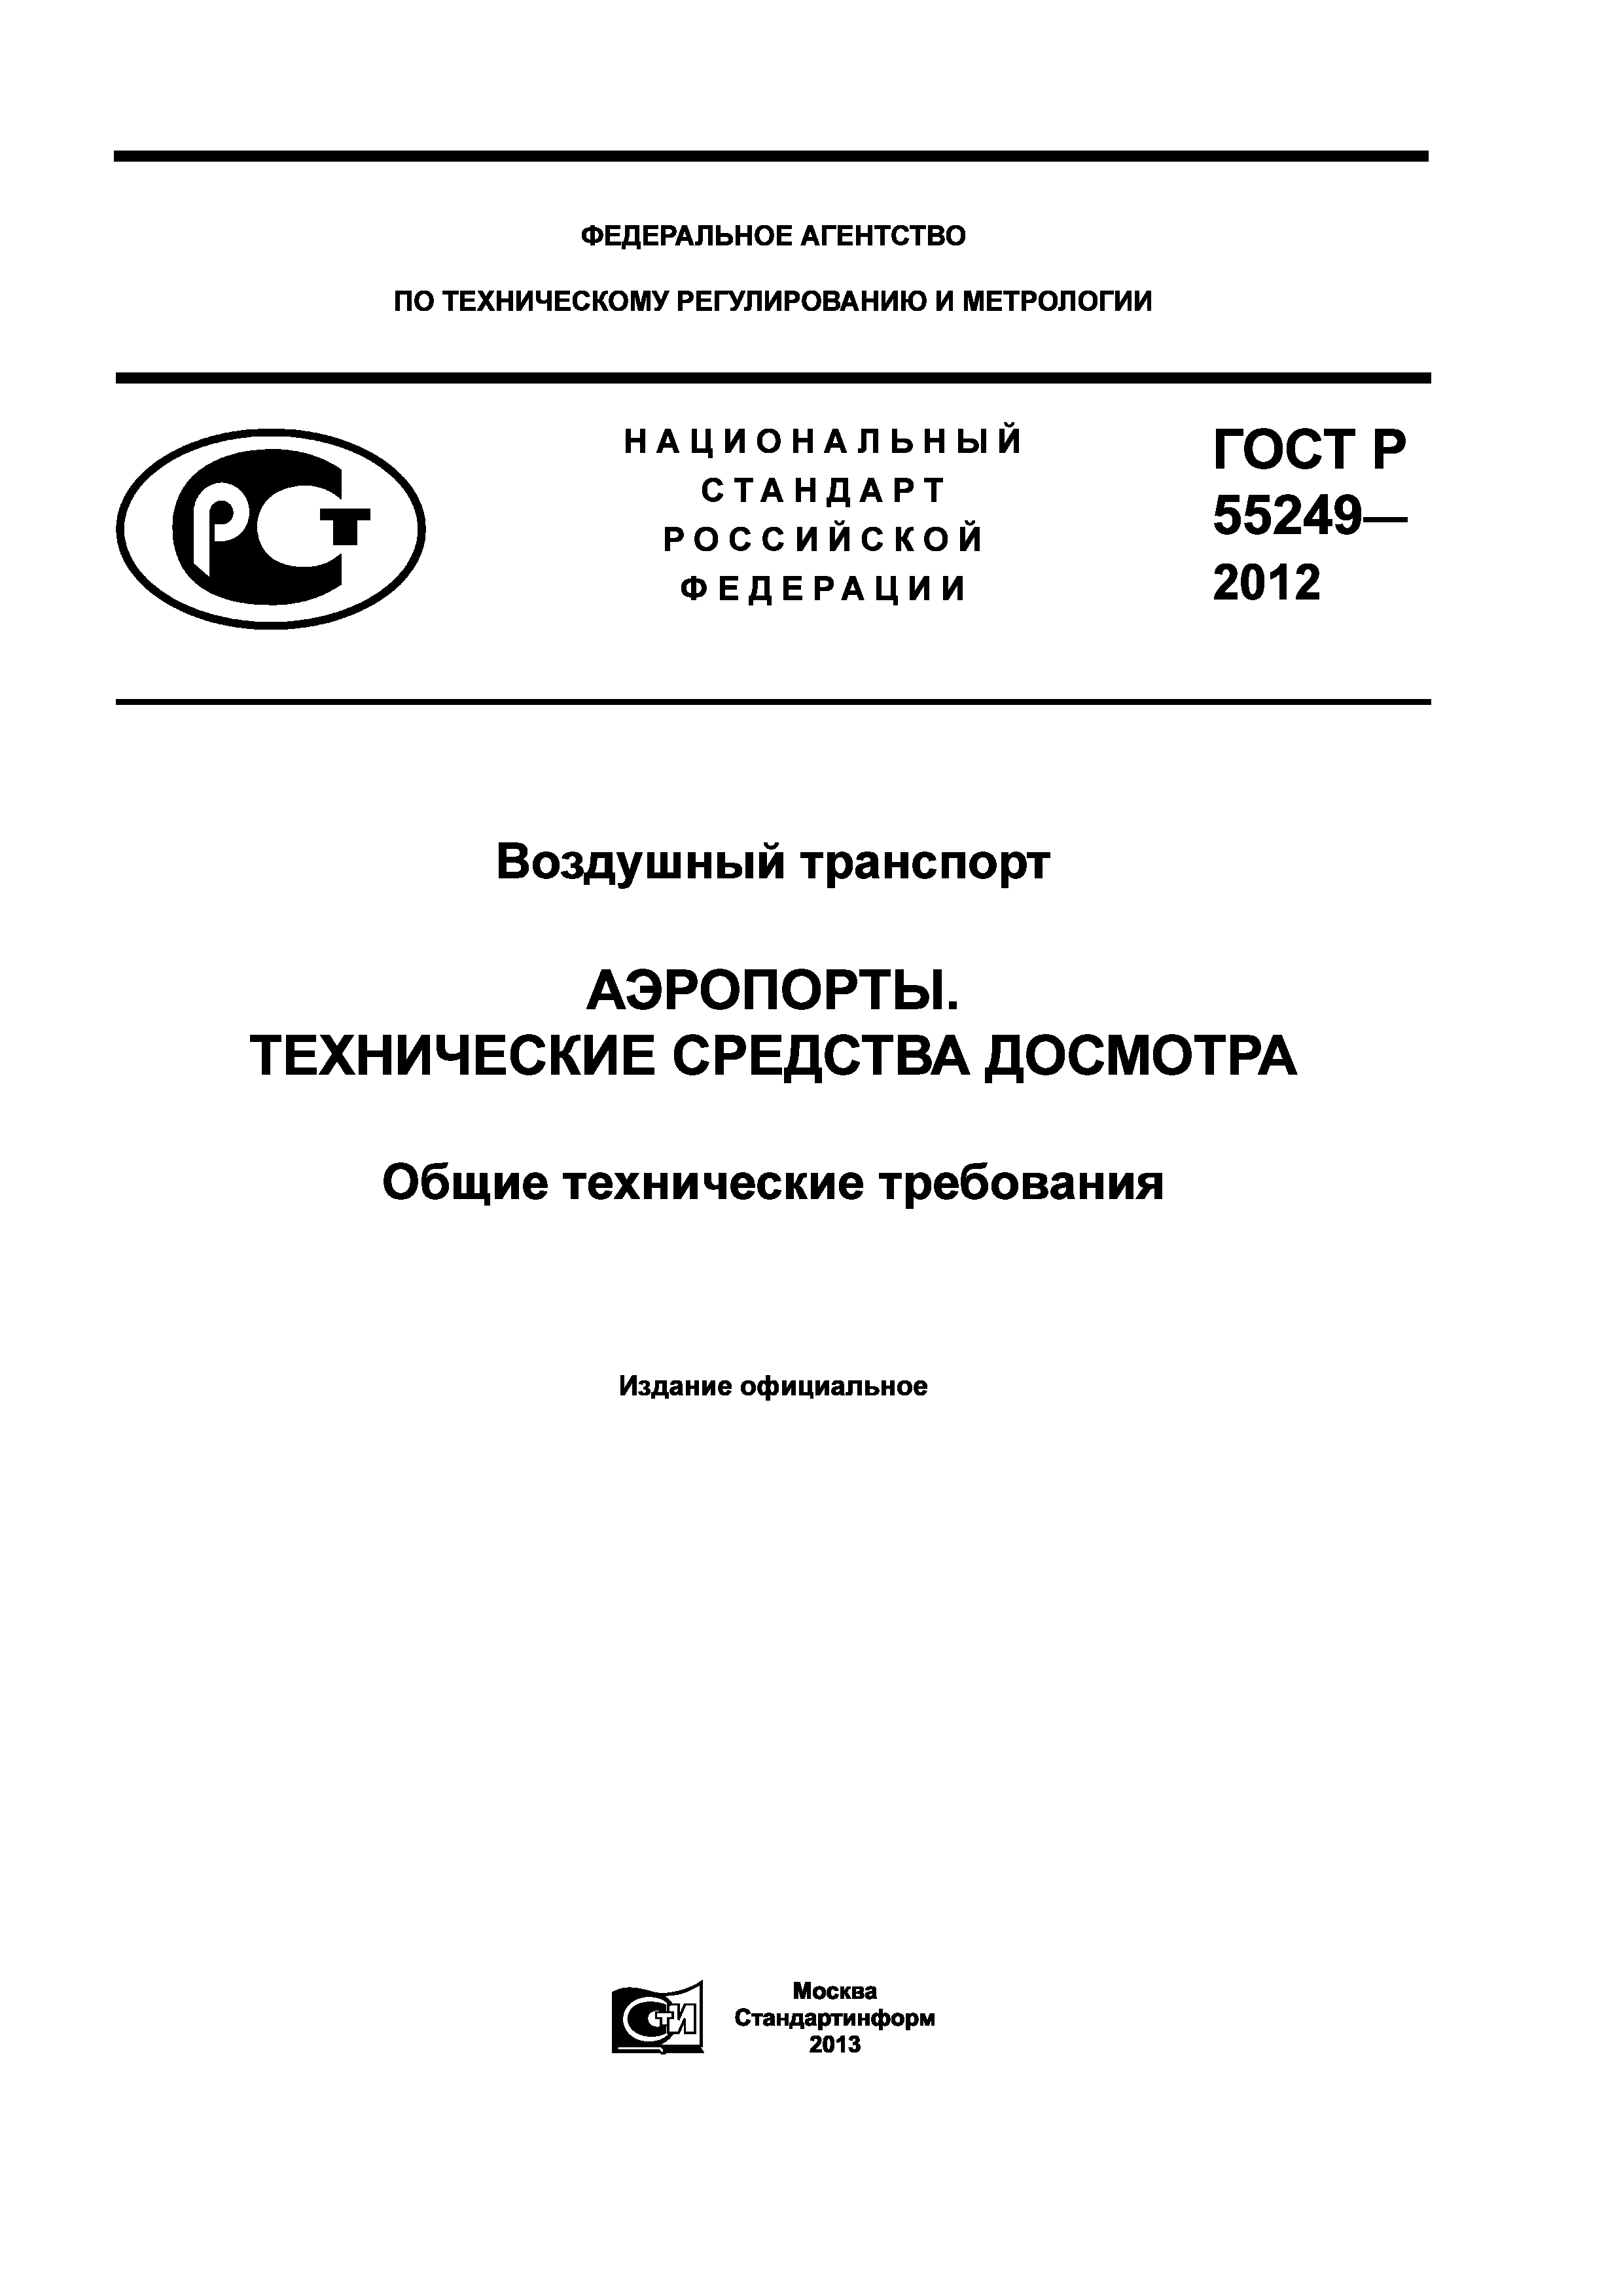 ГОСТ Р 55249-2012